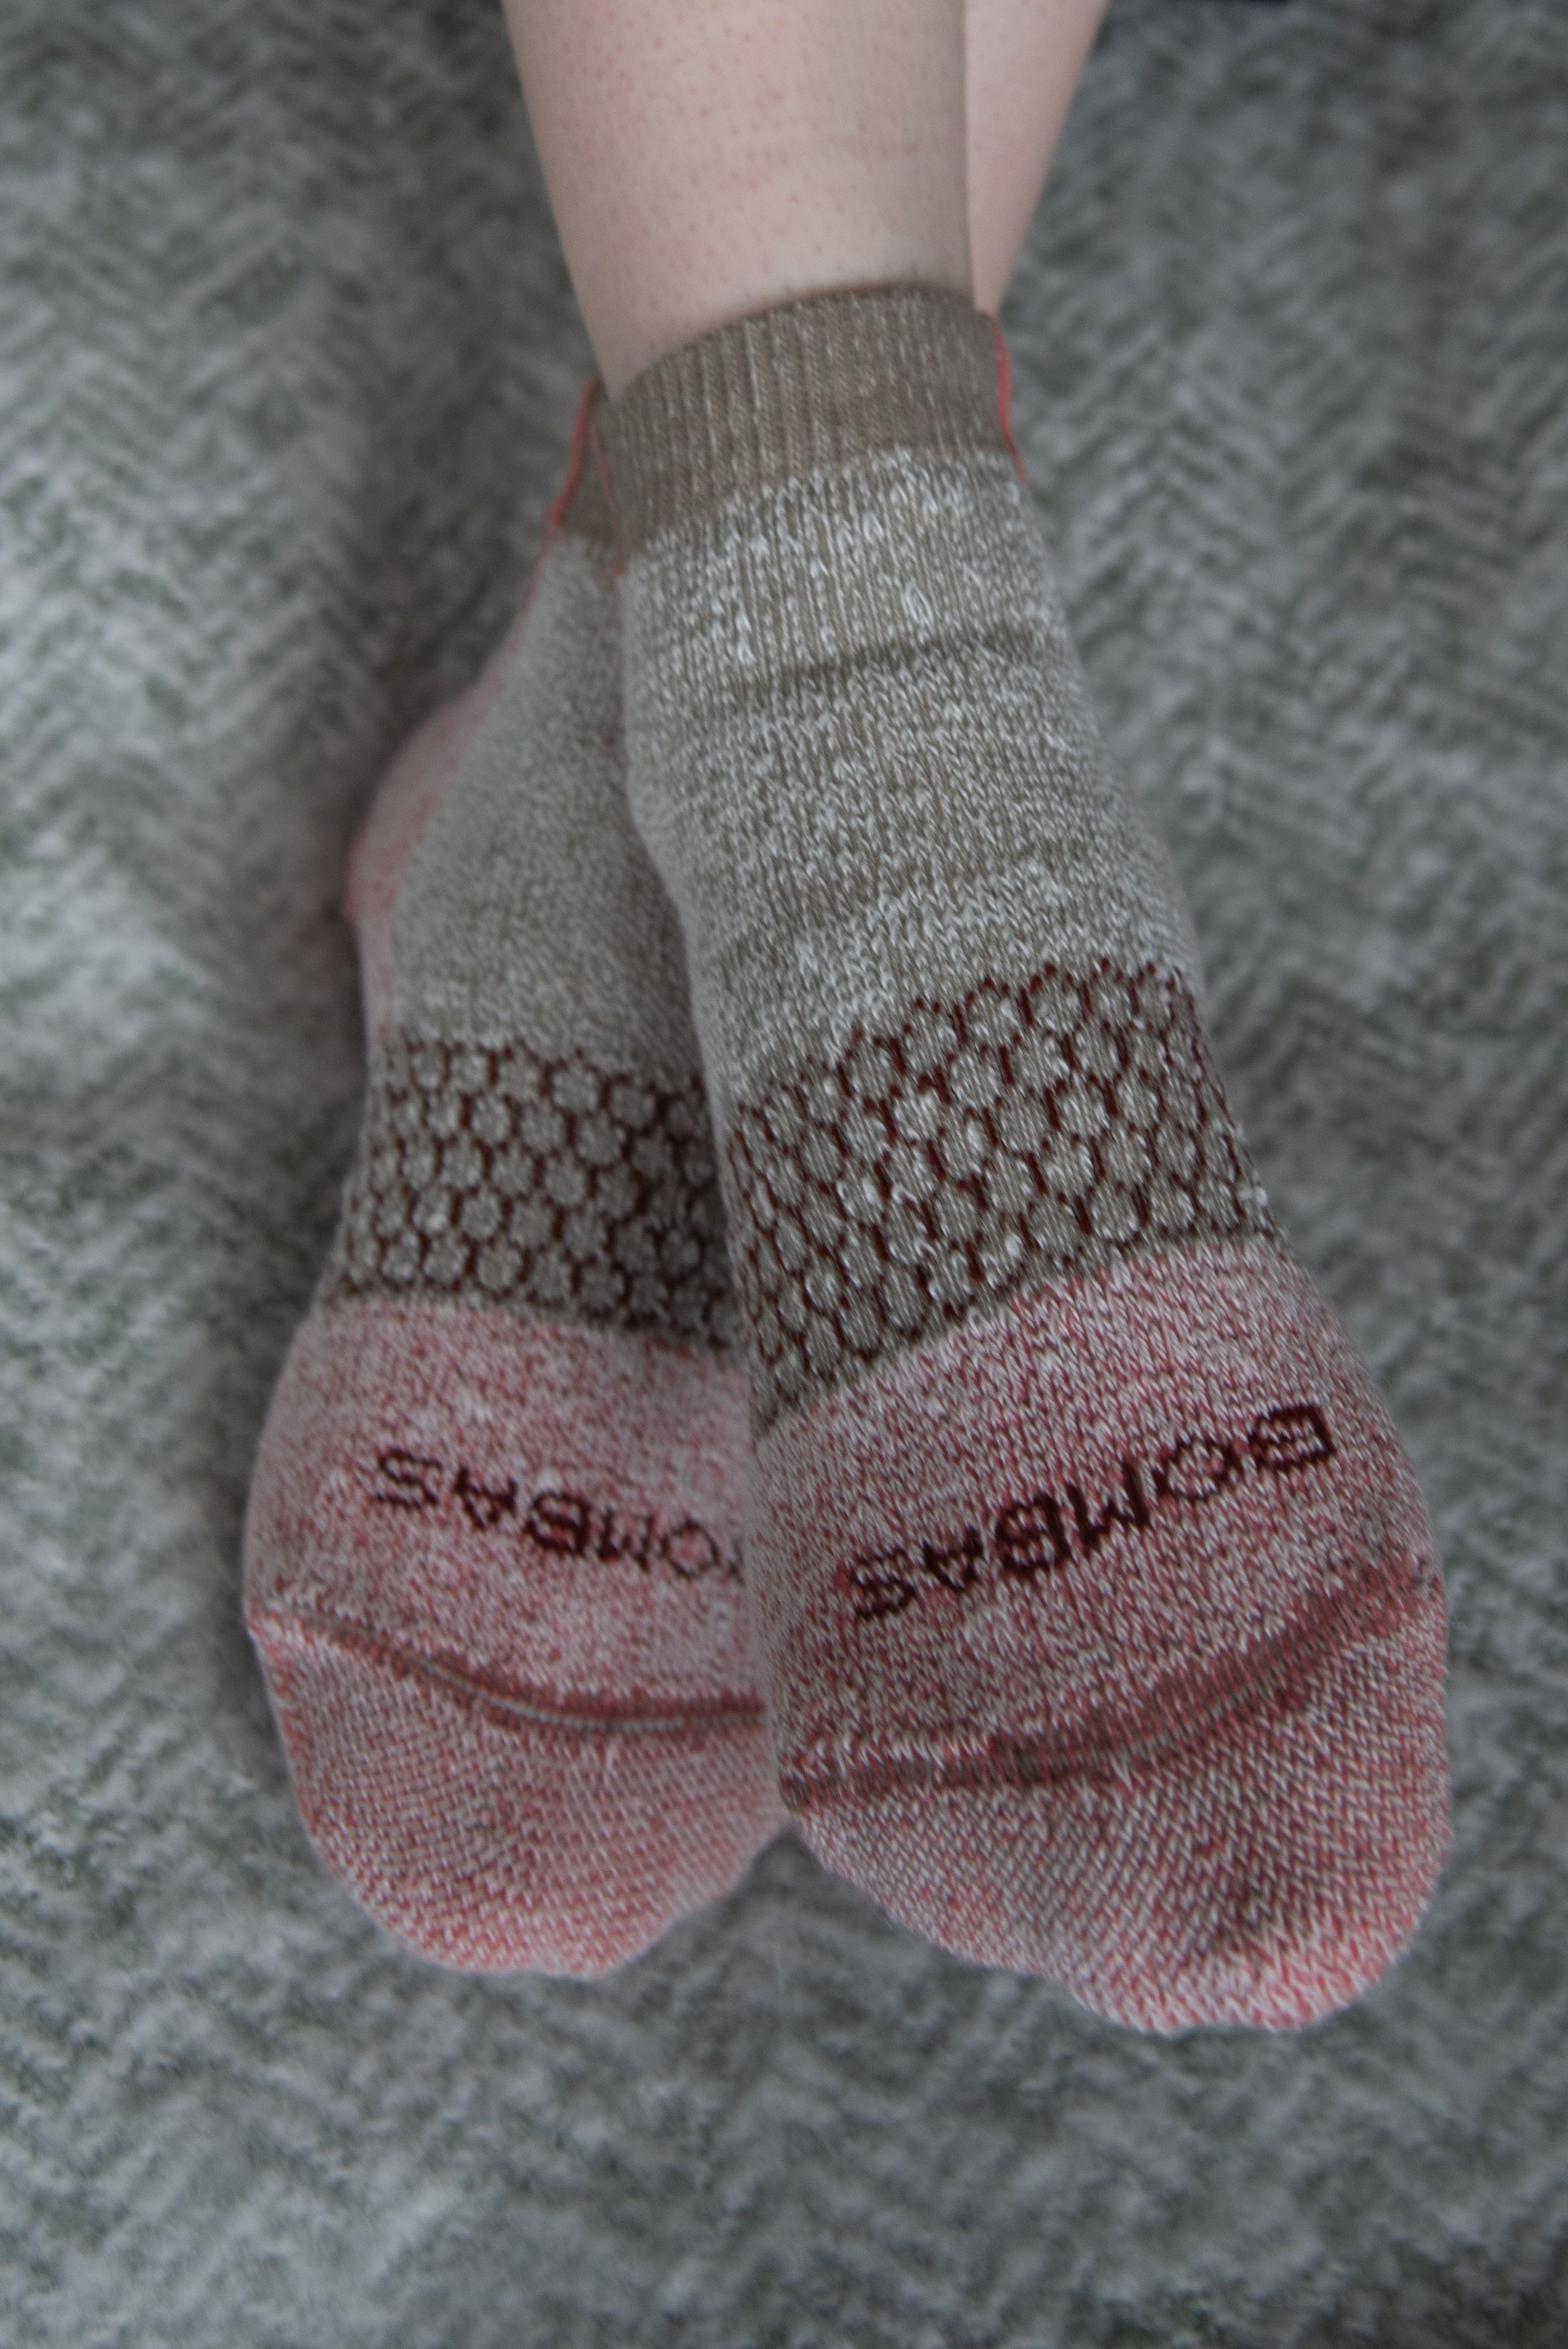 The Best Socks to Buy from Bombas - Wardrobe Oxygen